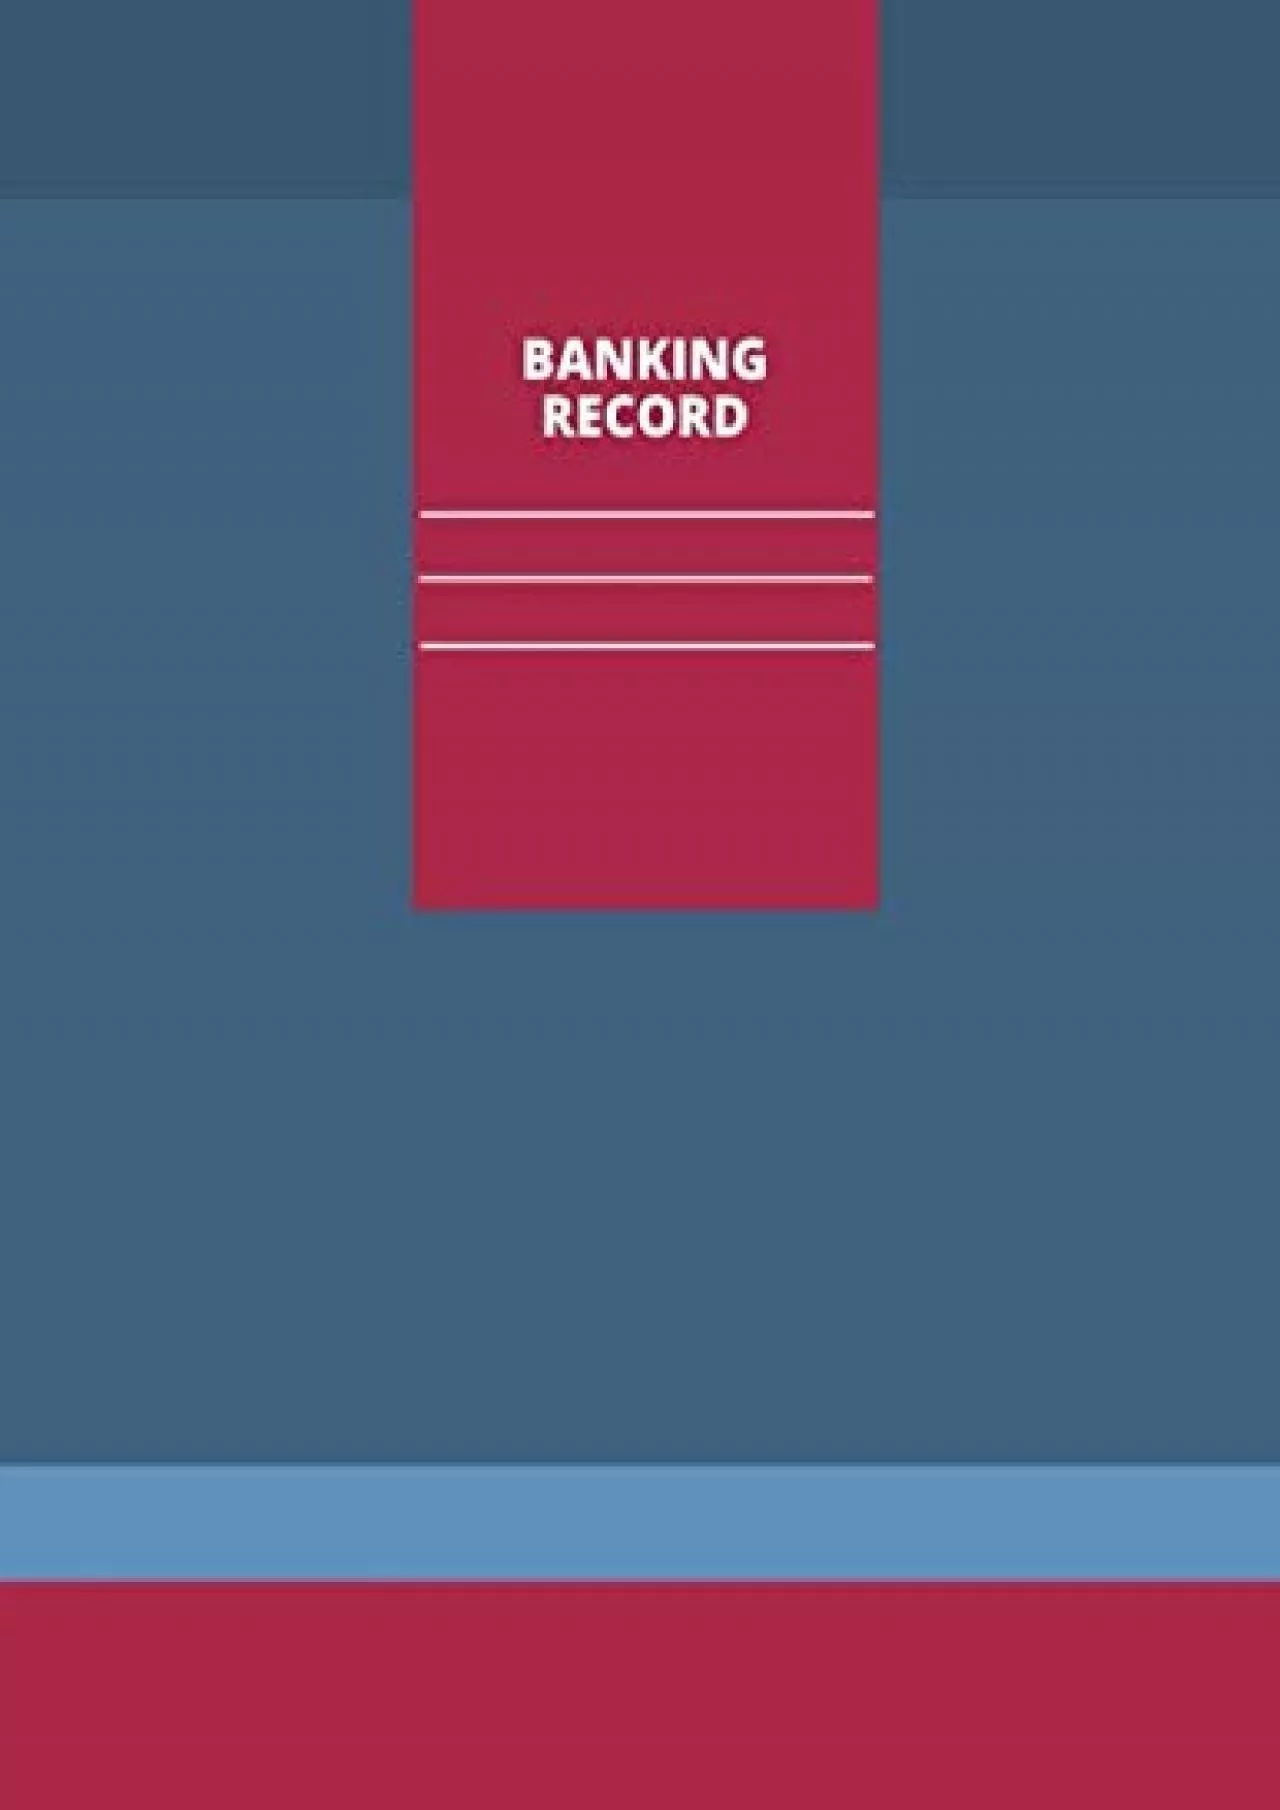 Banking Record: Bank transaction record book